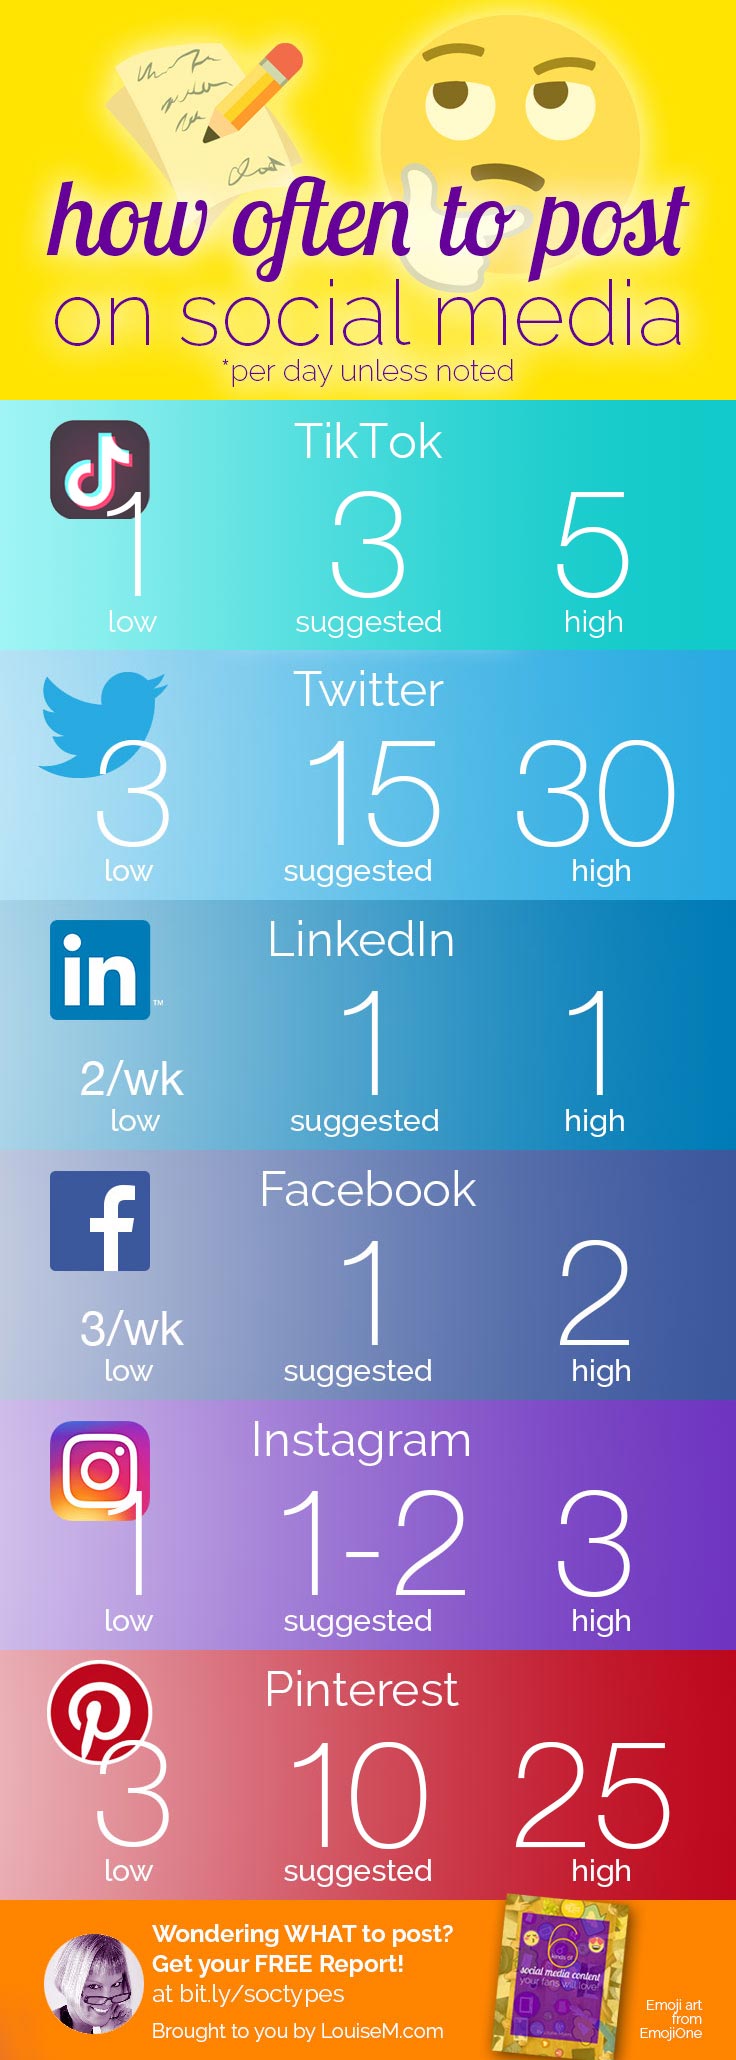 how often to post on social media infographic